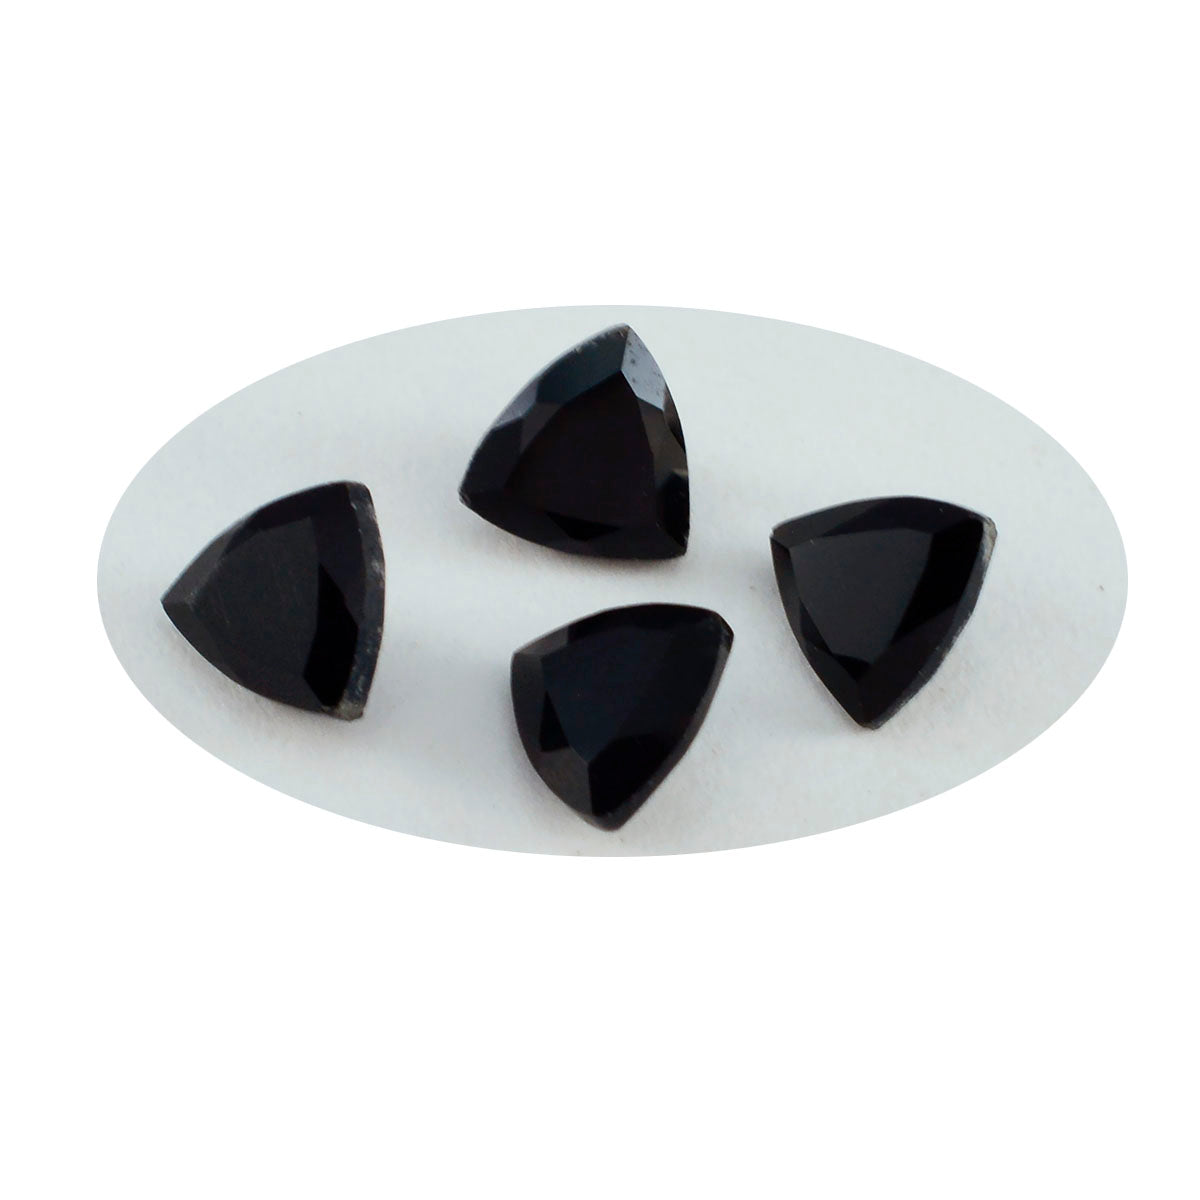 Riyogems 1PC Natural Black Onyx Faceted 7x7 mm Trillion Shape Good Quality Stone